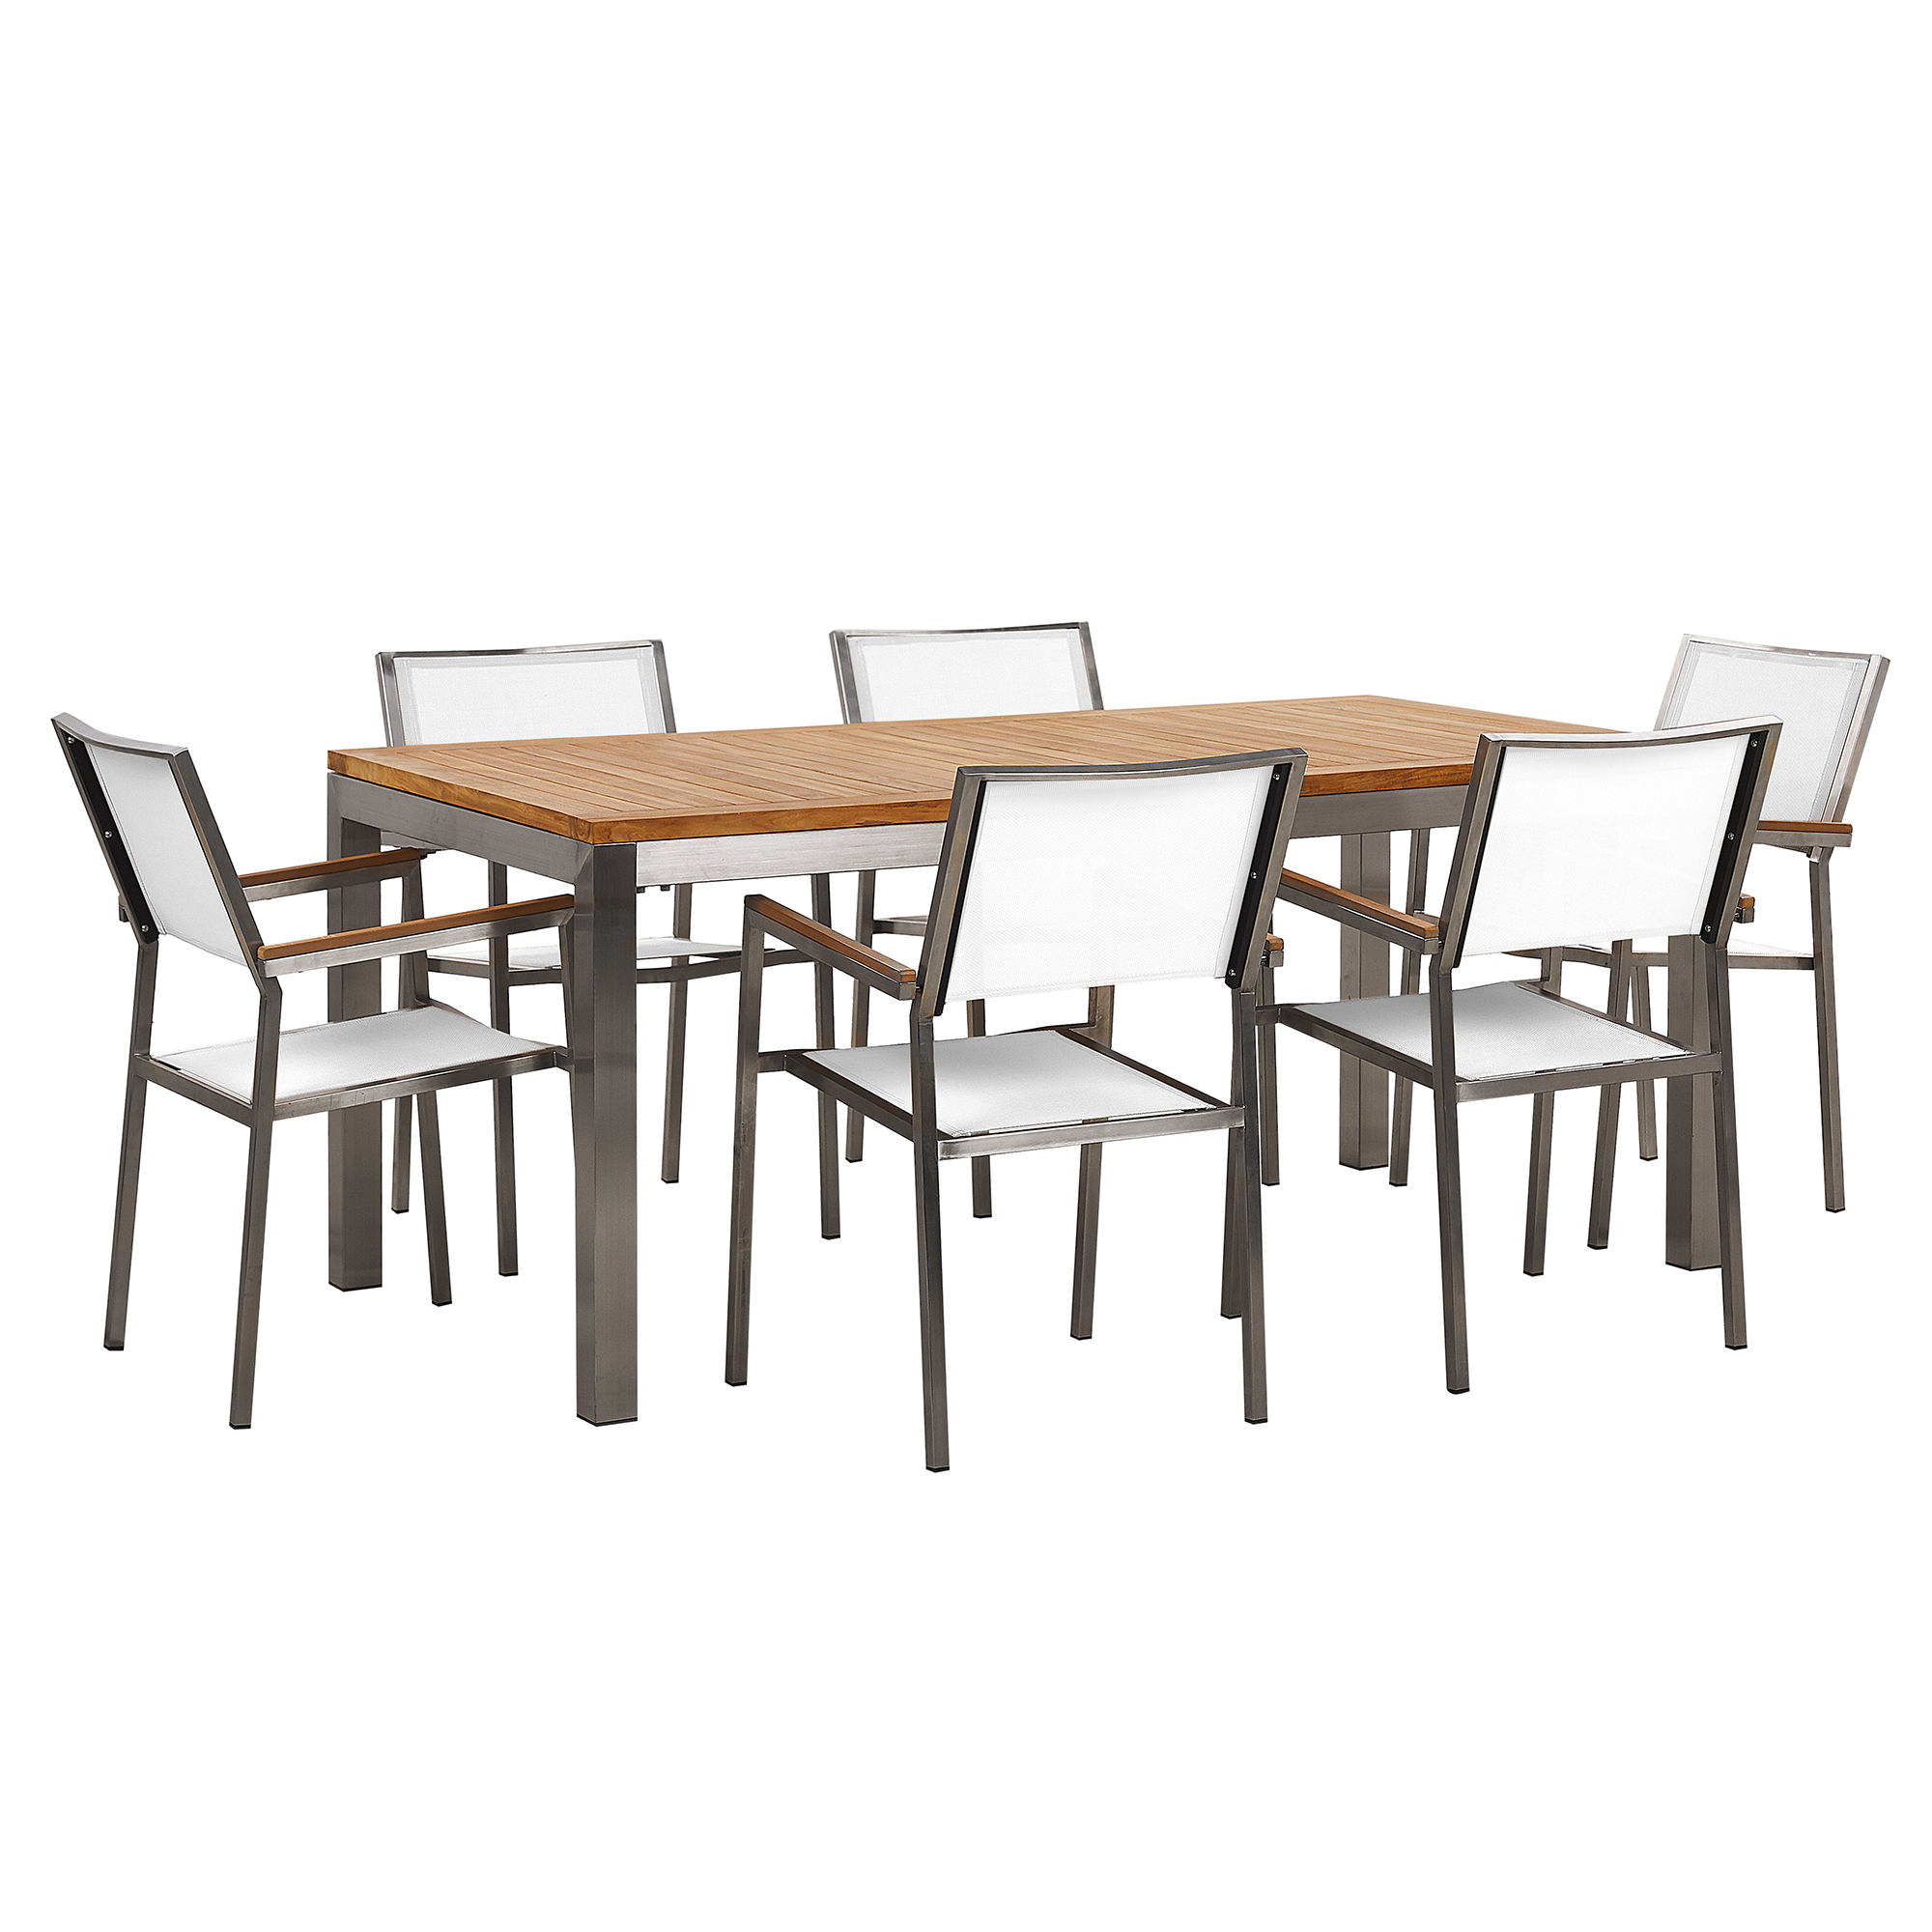 Beliani Garden Dining Set Light Teak Wood Top Steel Frame 180 x 90 cm with 6 White Chairs